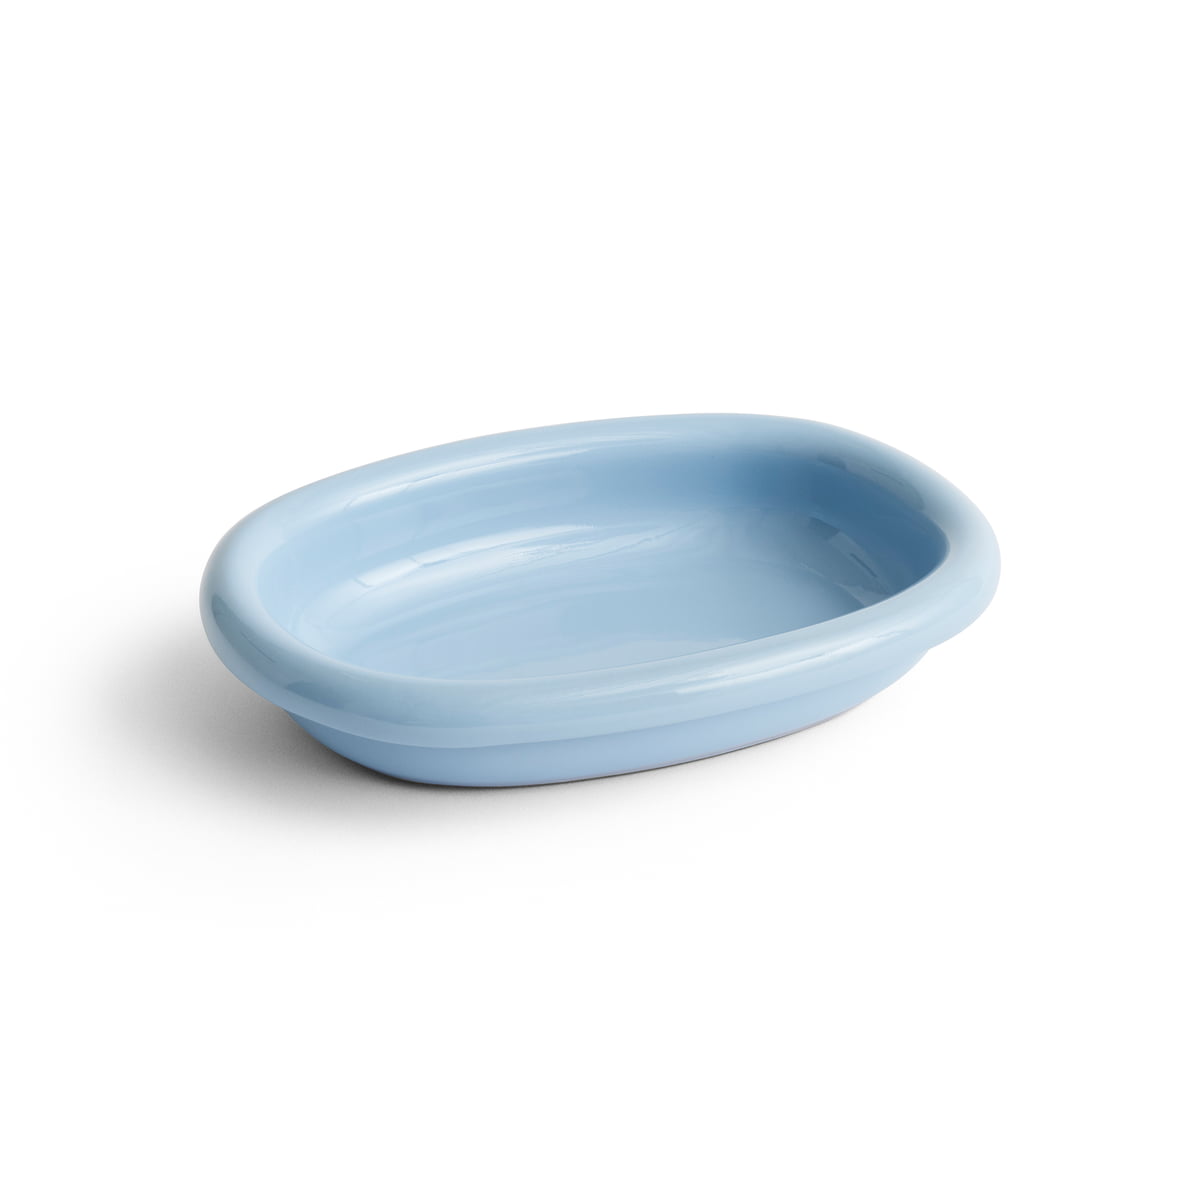 hay - barro plat de service ovale, s, bleu clair